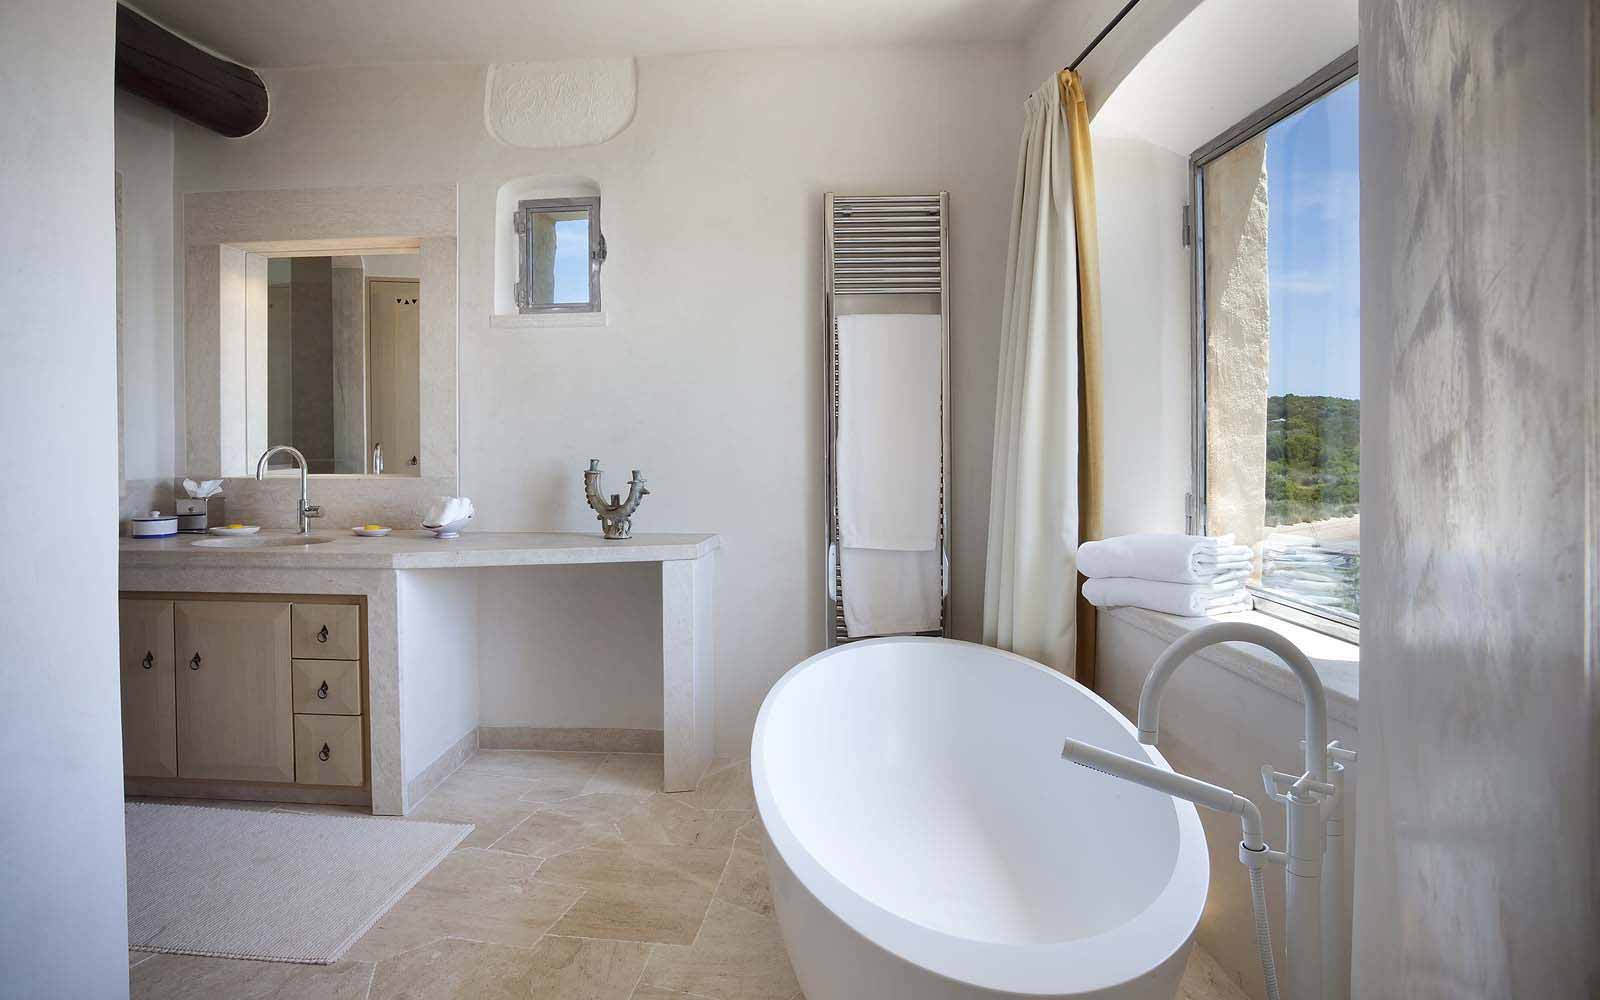 A bathroom of a Premium Suite at the Cala di Volpe